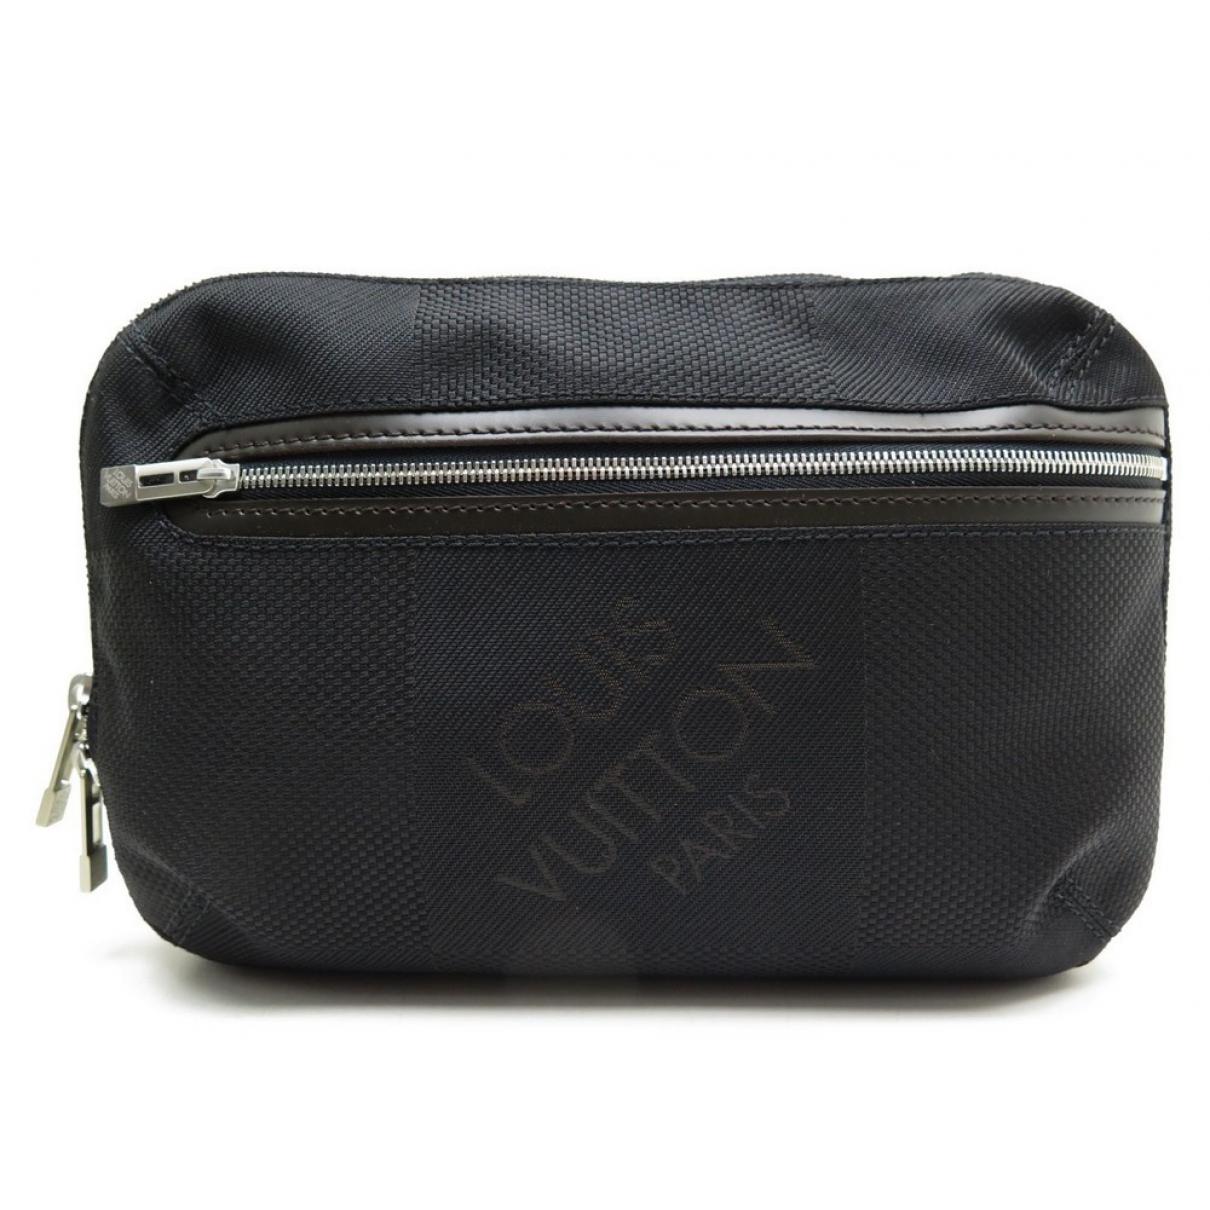 Lyst - Louis Vuitton Cloth Clutch Bag in Black